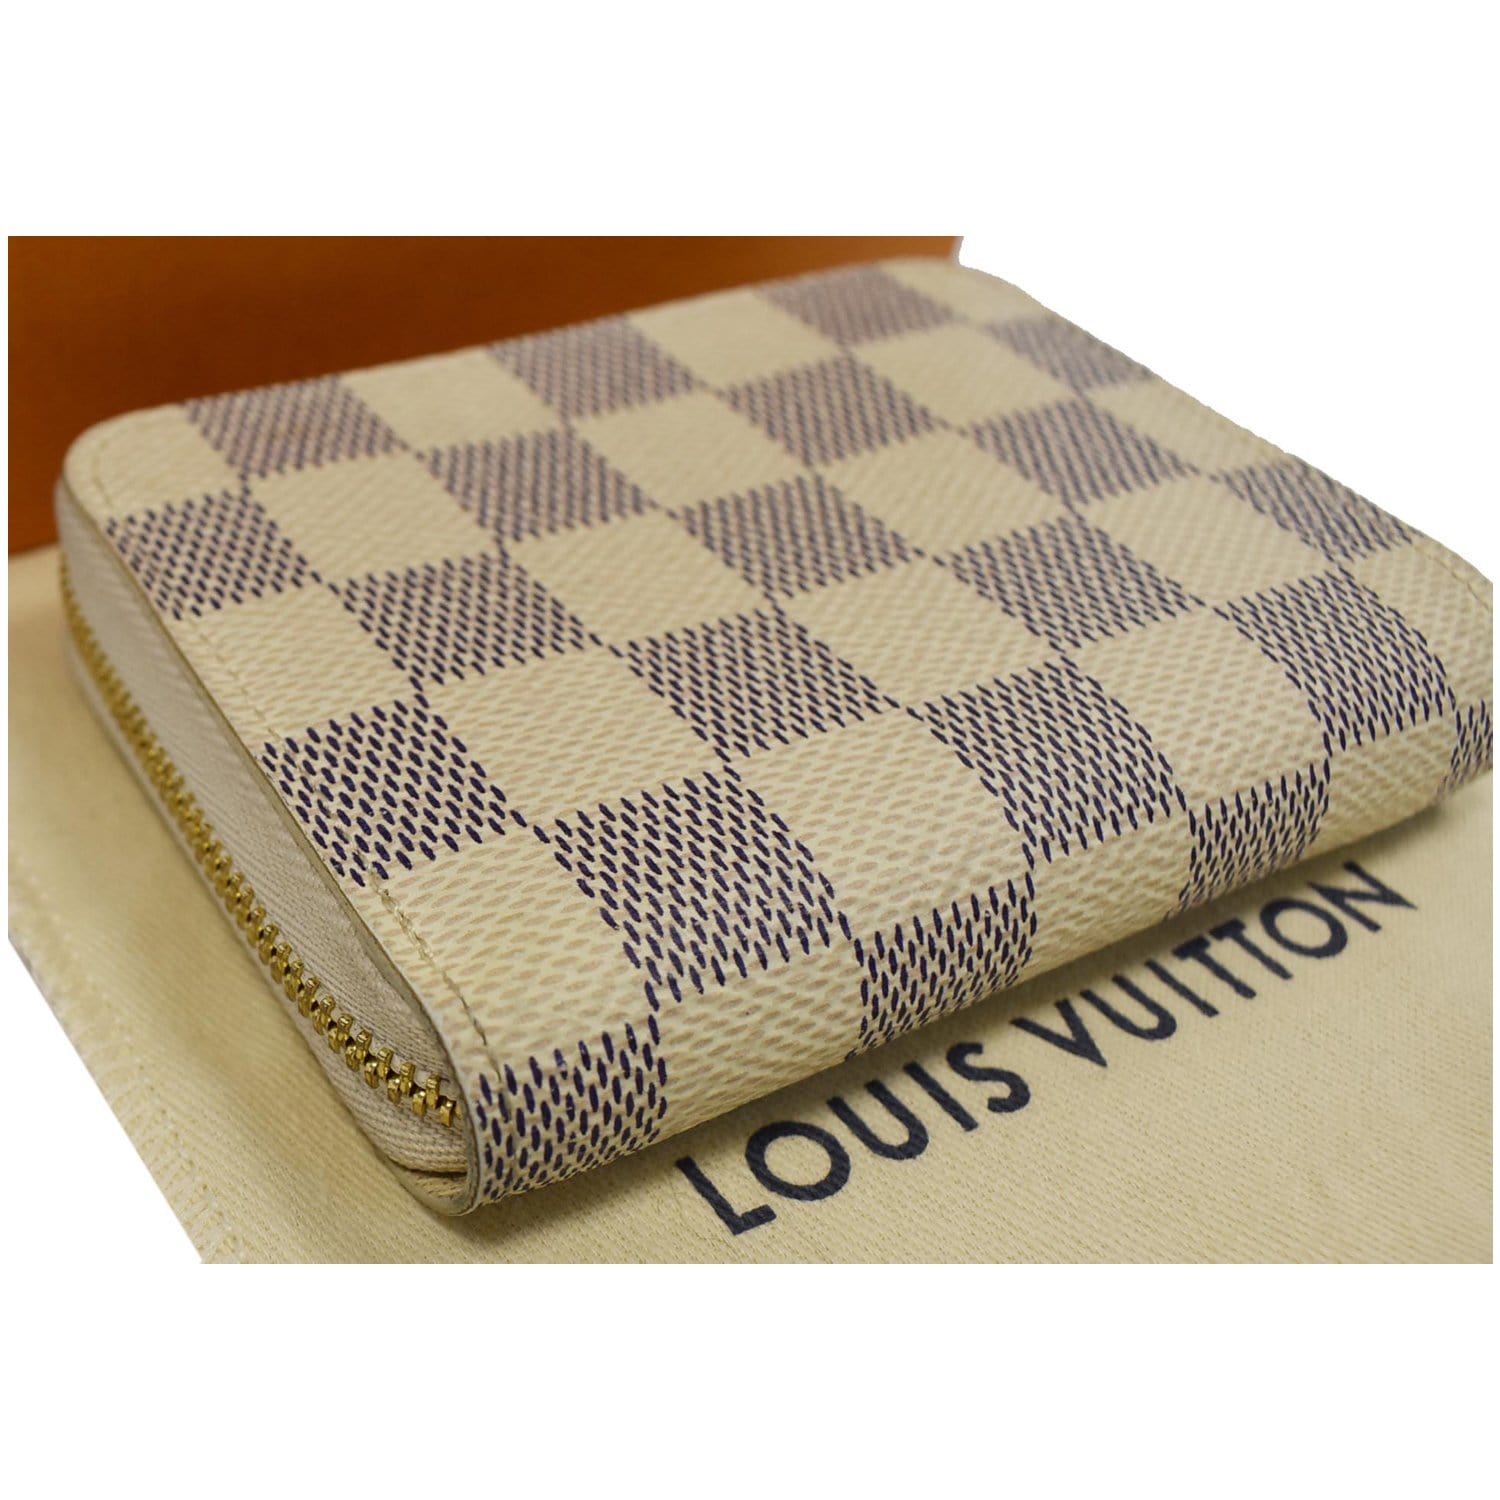 Louis Vuitton Coin case Mini Purse Damier Azur White Key Chain Leather #462D